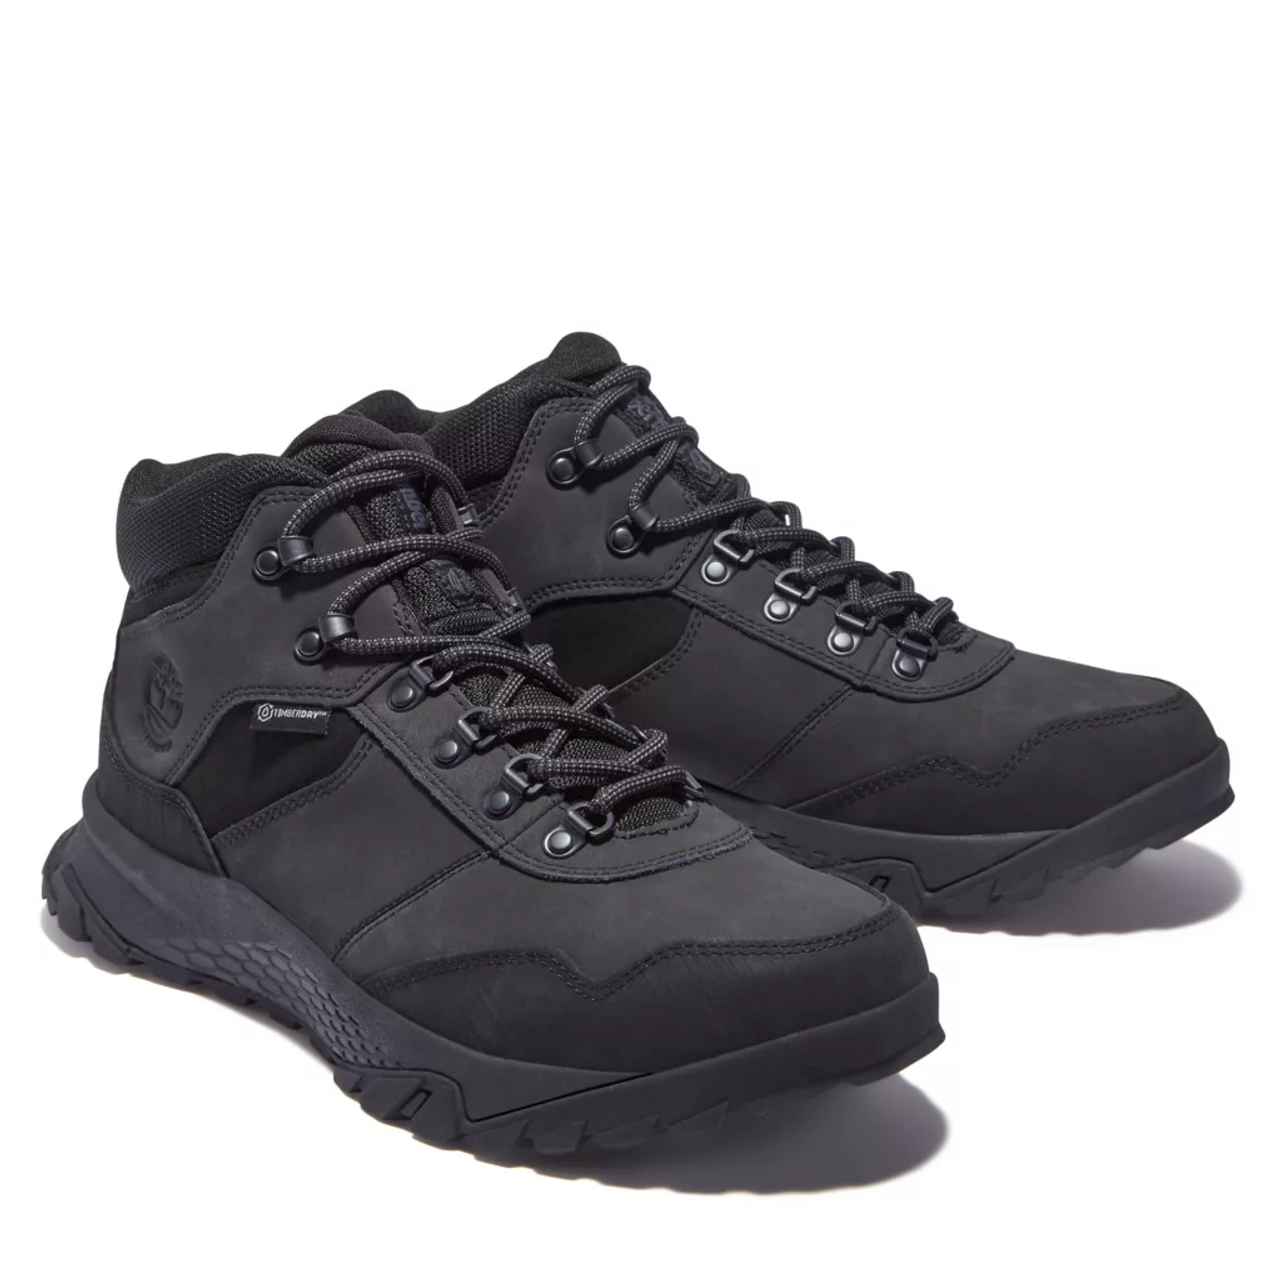 Timberland Men's Lincoln Peak Waterproof Hiking Boots- Black Leather ...